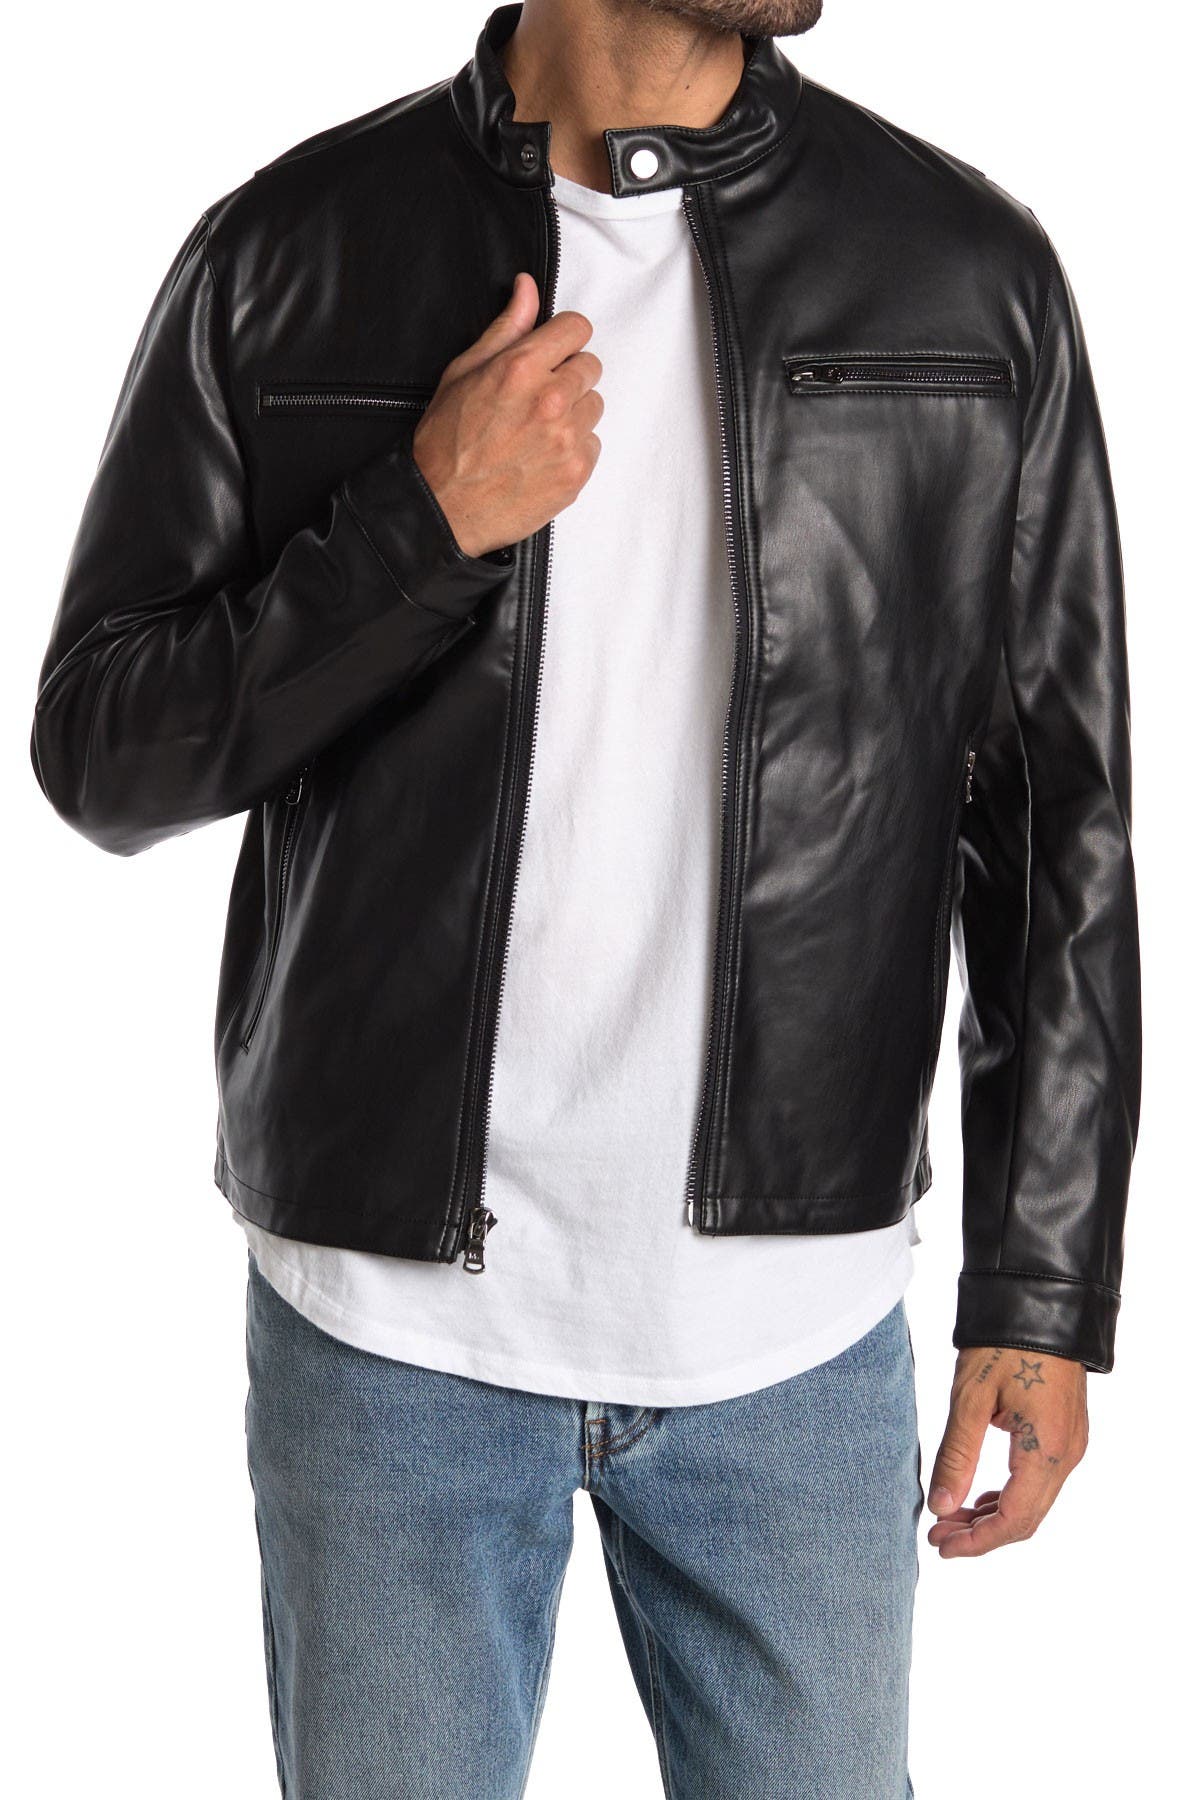 michael kors motorcycle jacket